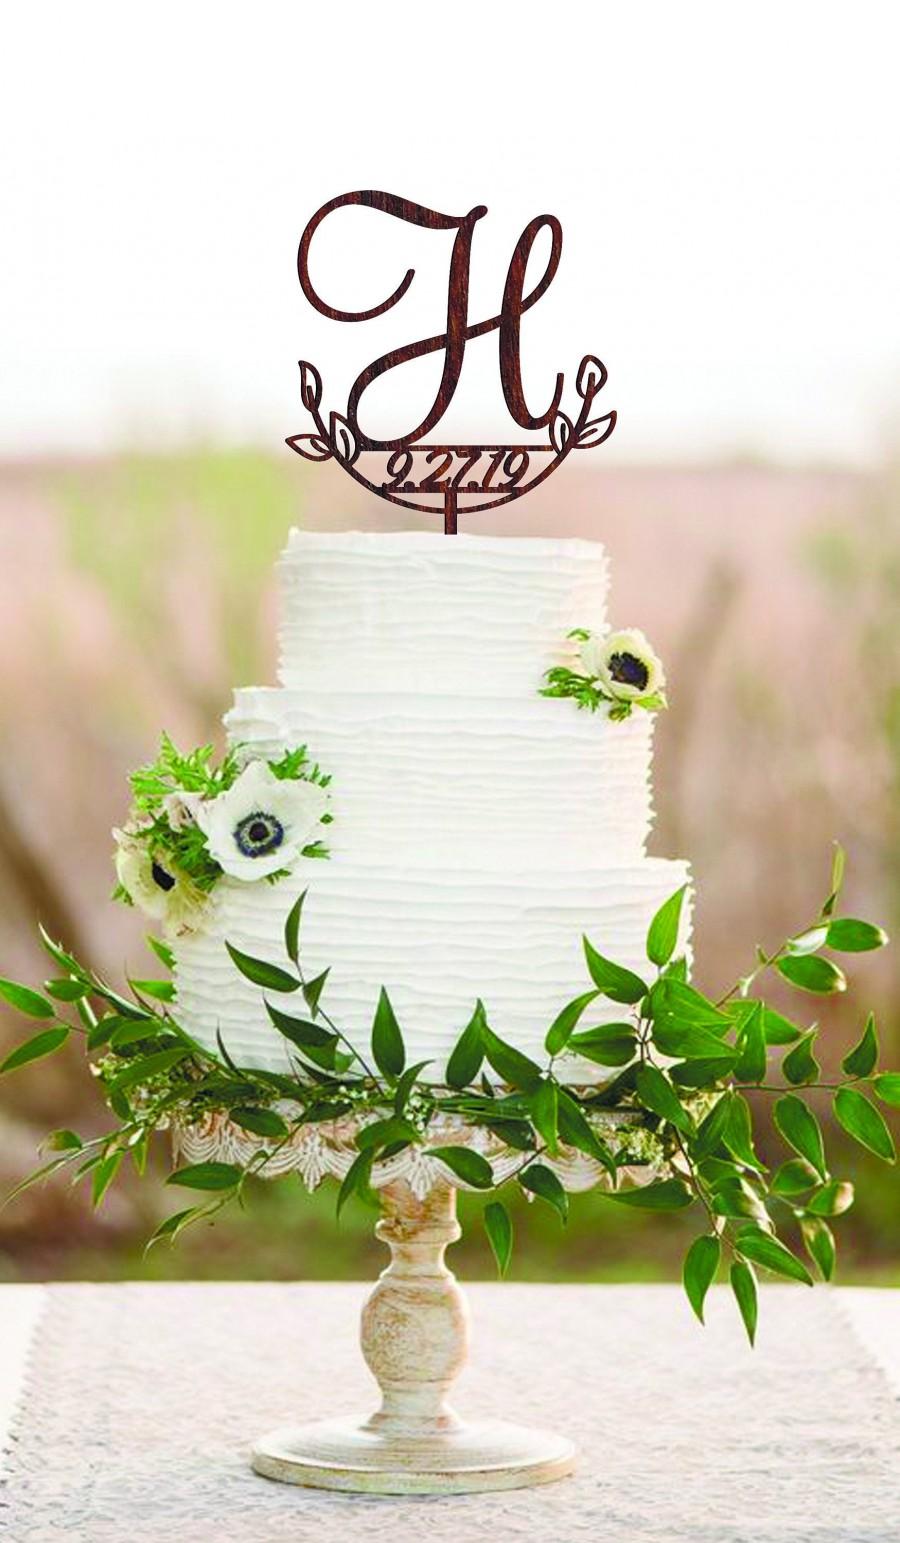 Wedding - H cake topper date Wedding cake topper H Cake toppers for wedding Initial cake topper Wood monogram cake topper Rustic cake topper wedding H